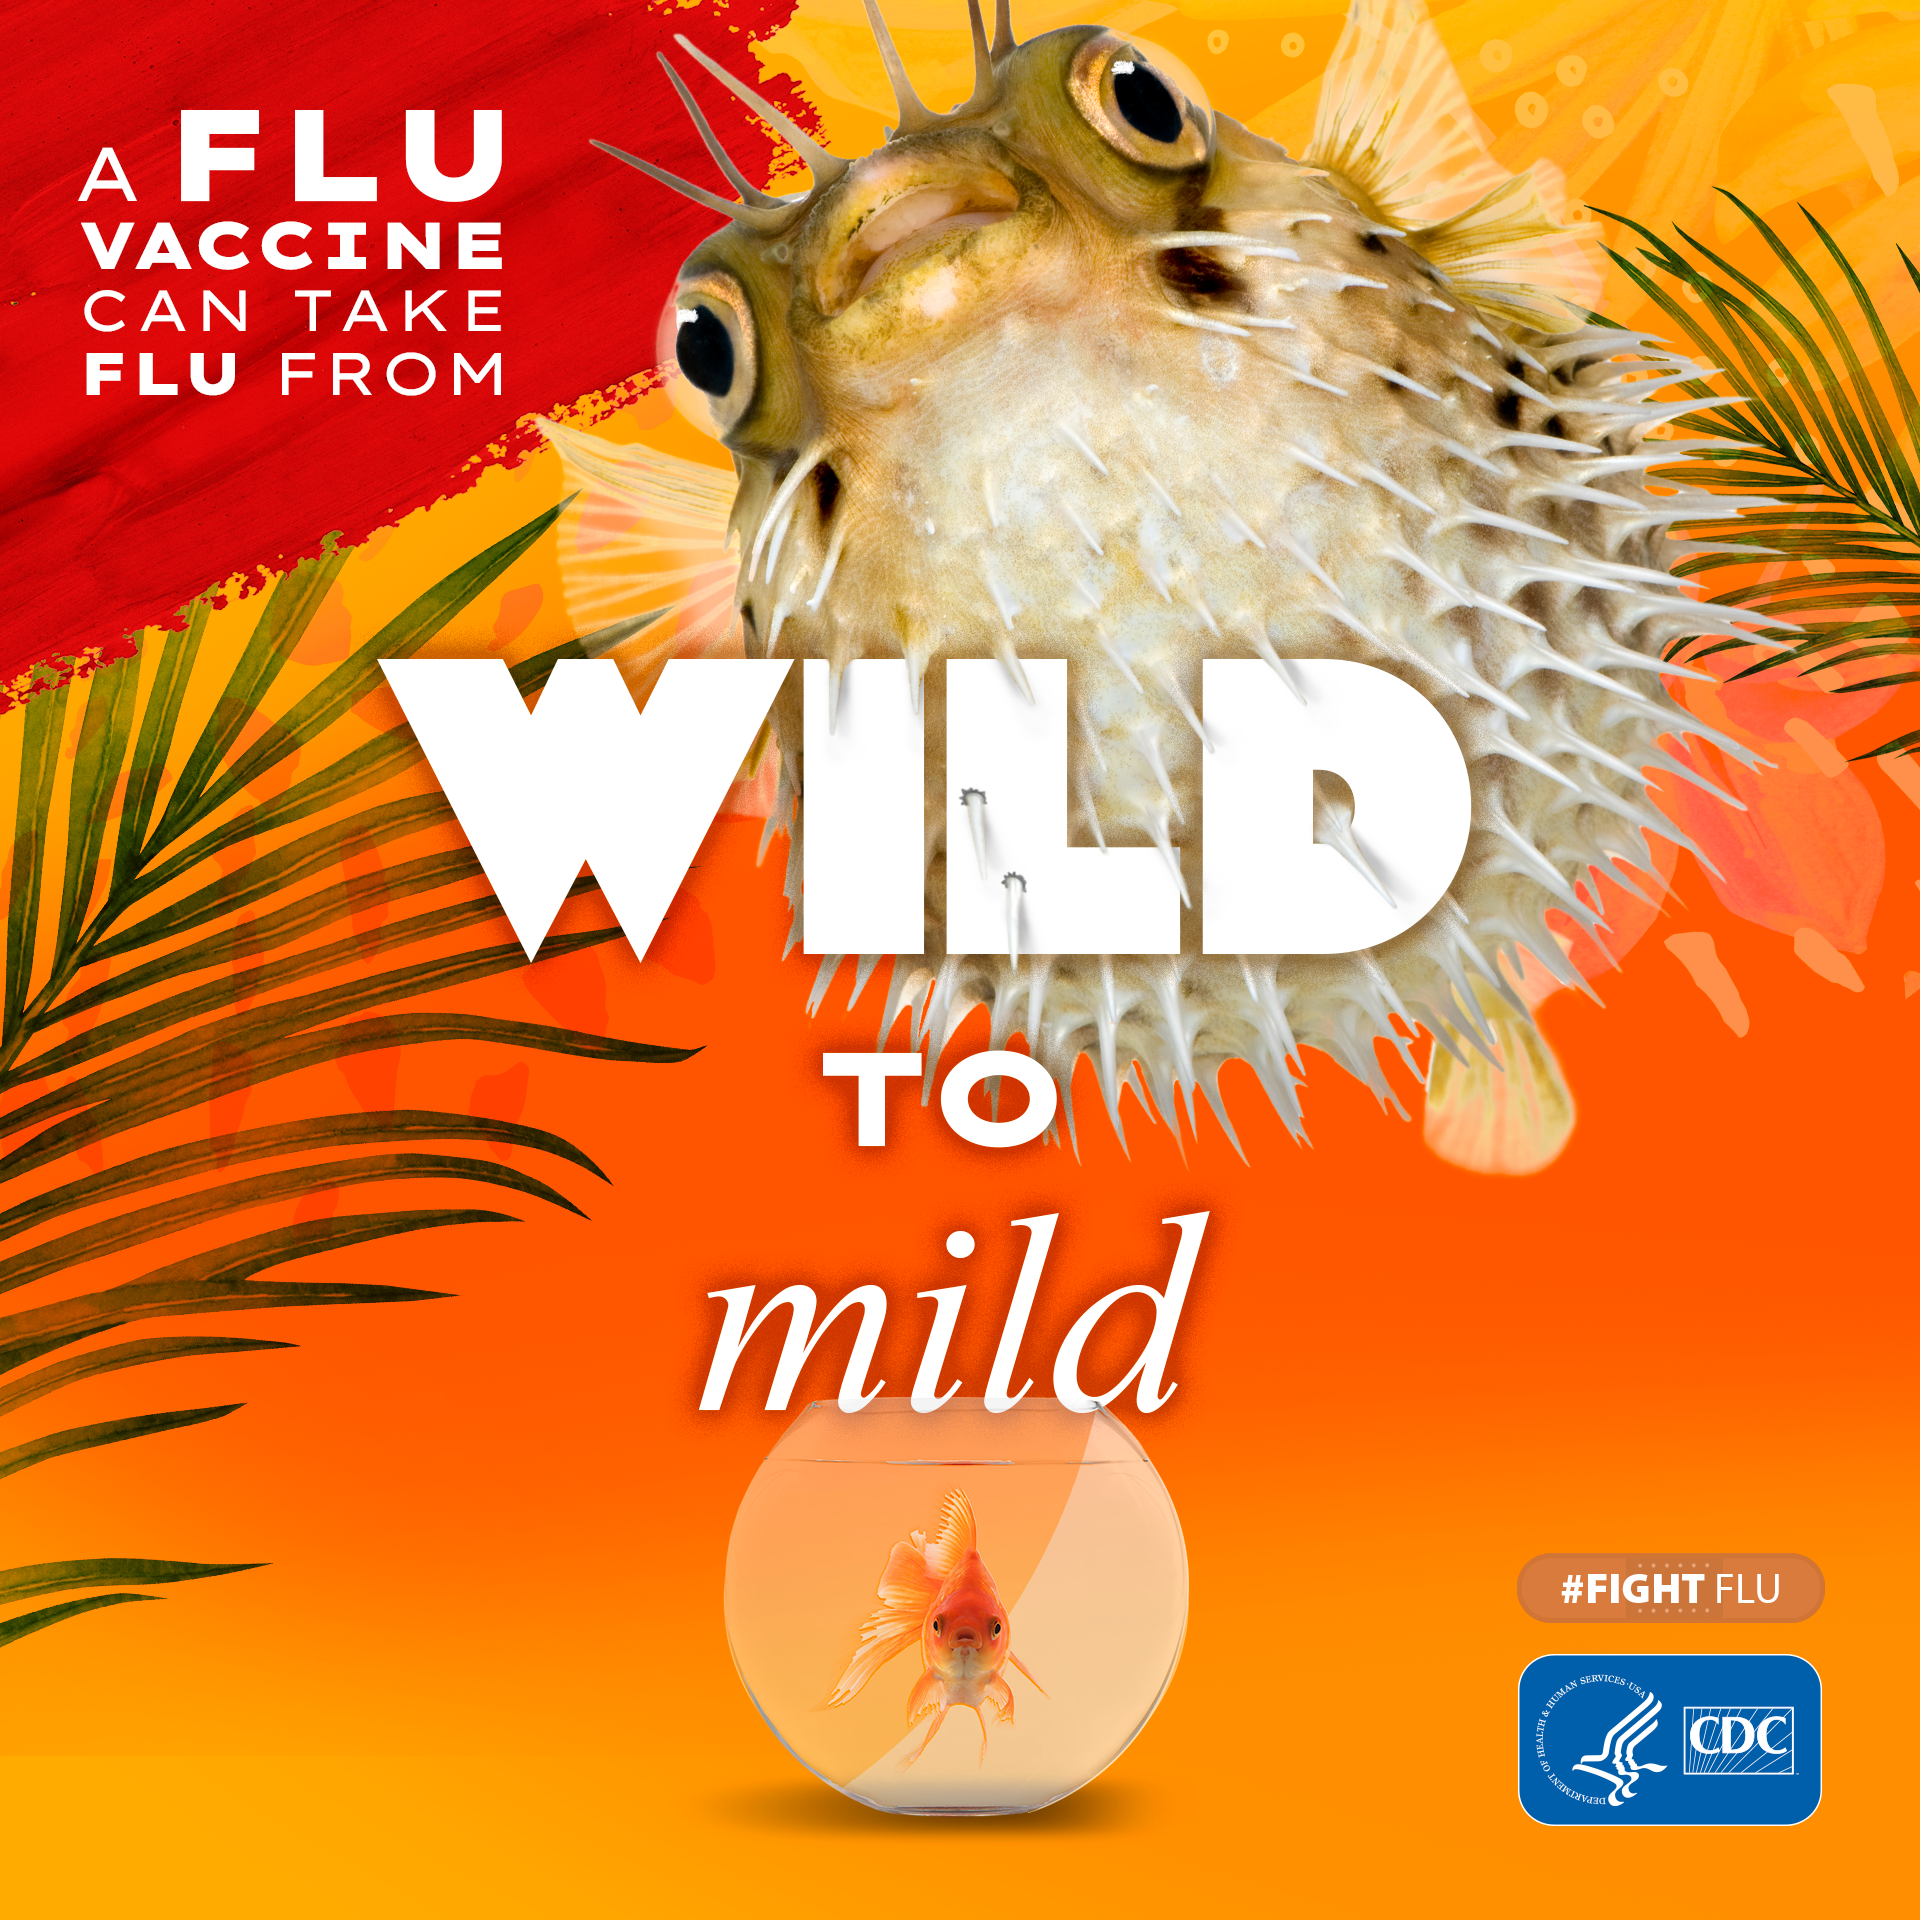 pufferfish with text: A flu vaccine can take flu from wild to mild #fightflu CDC logo